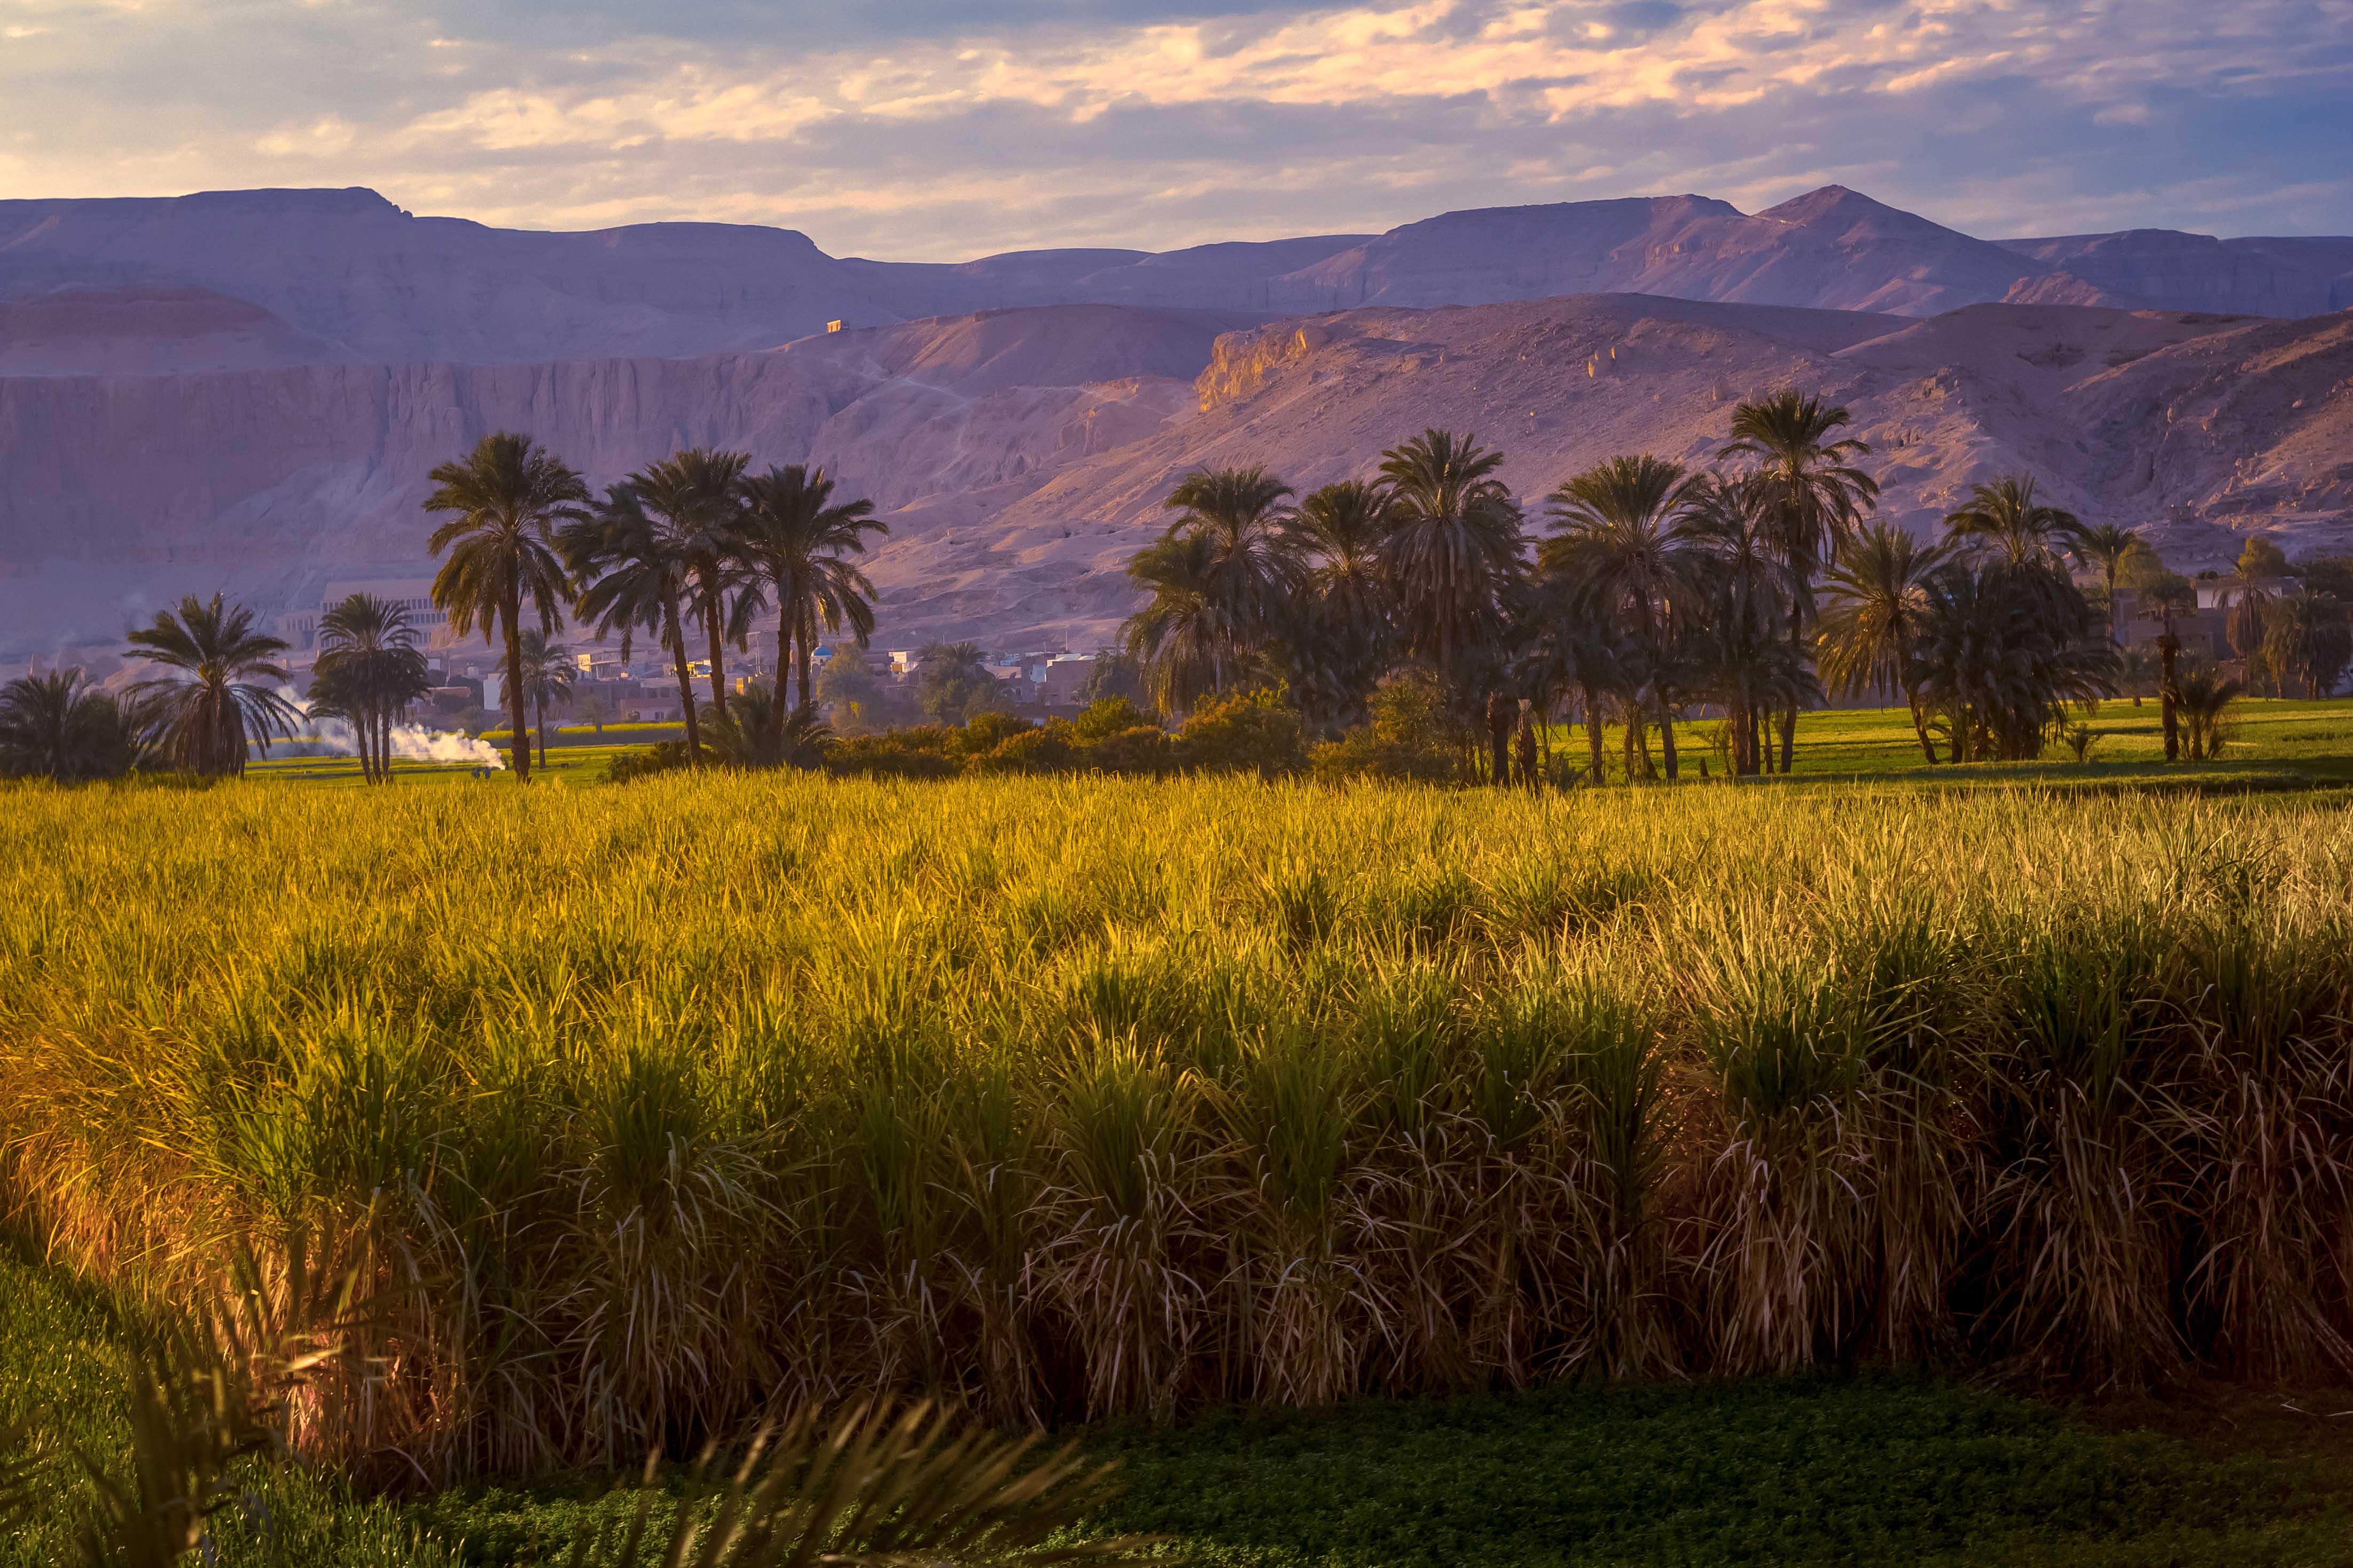 Nile valley mountains